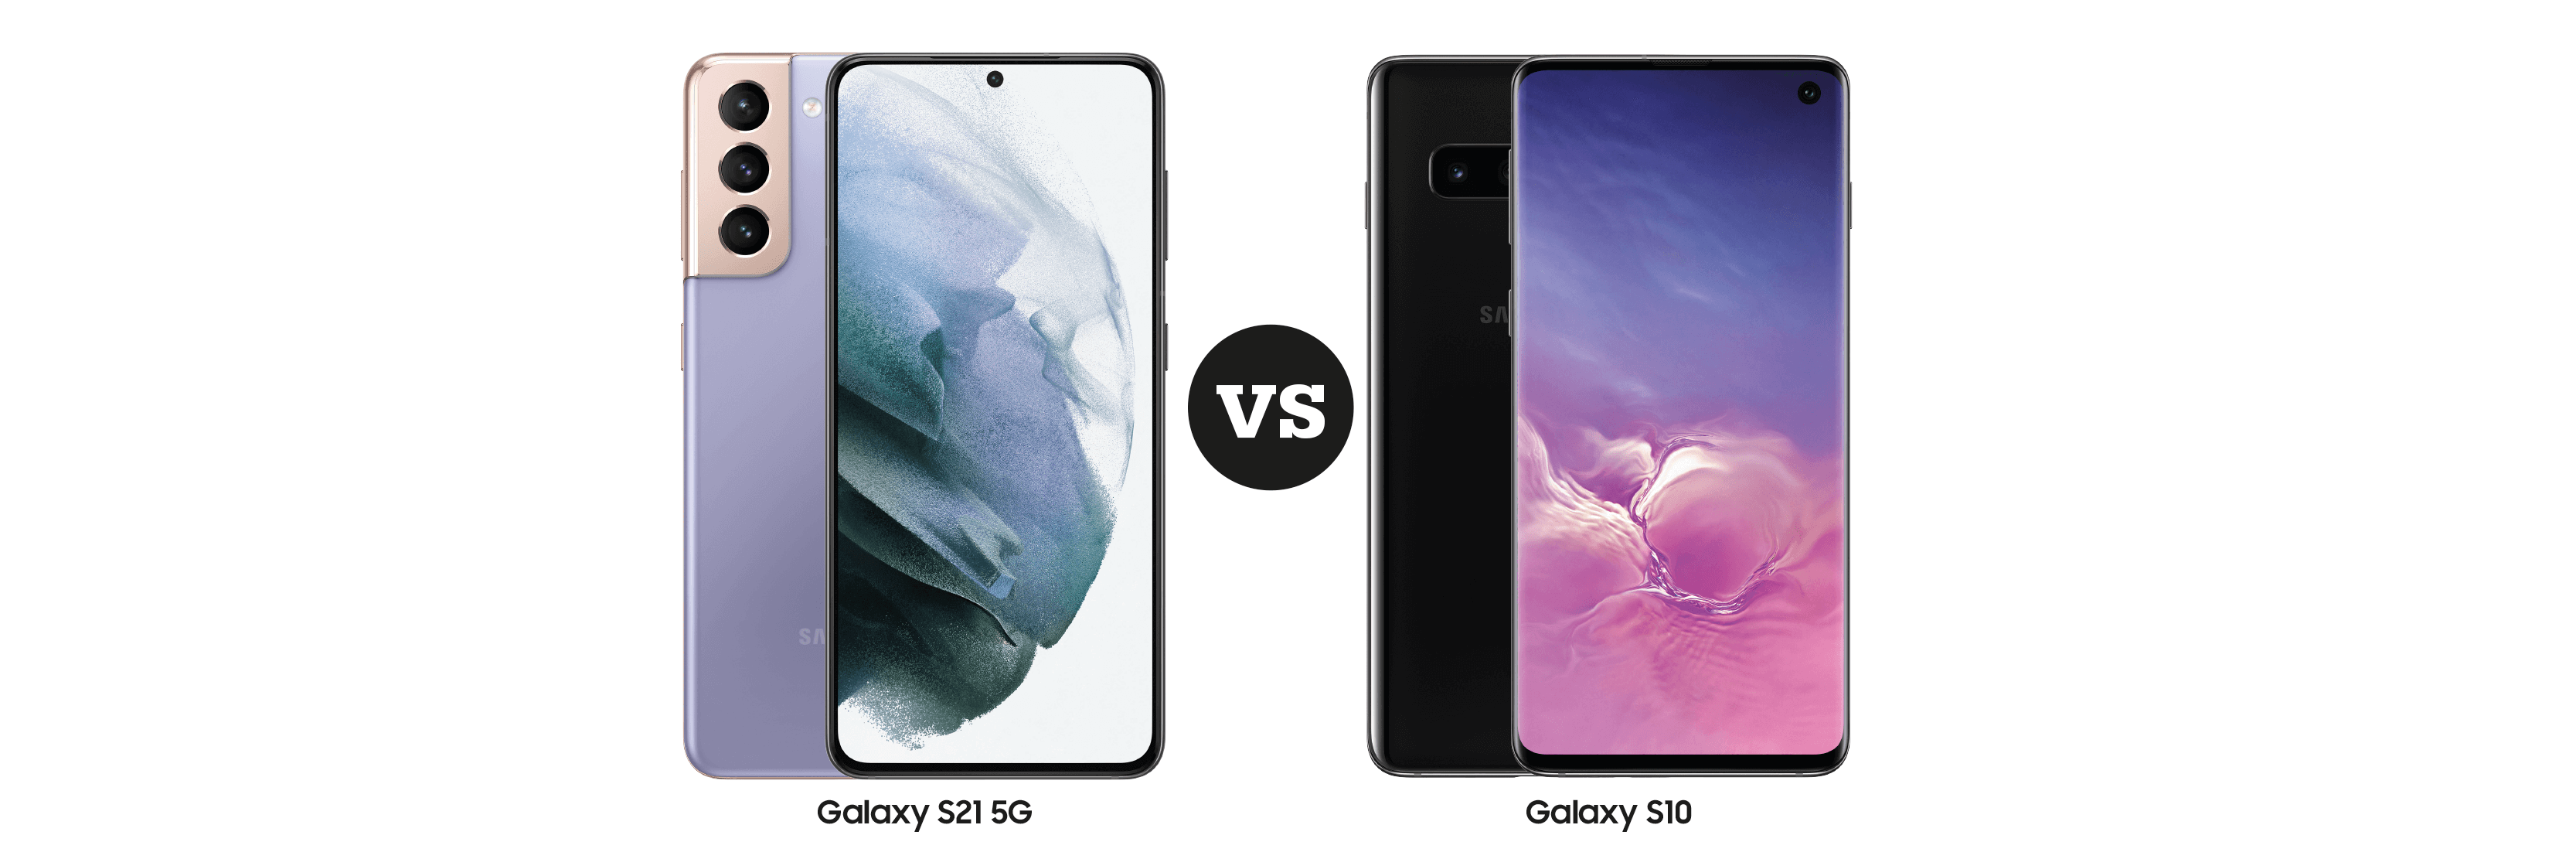 De verschillen tussen de Samsung Galaxy S10 vs Samsung Galaxy S21